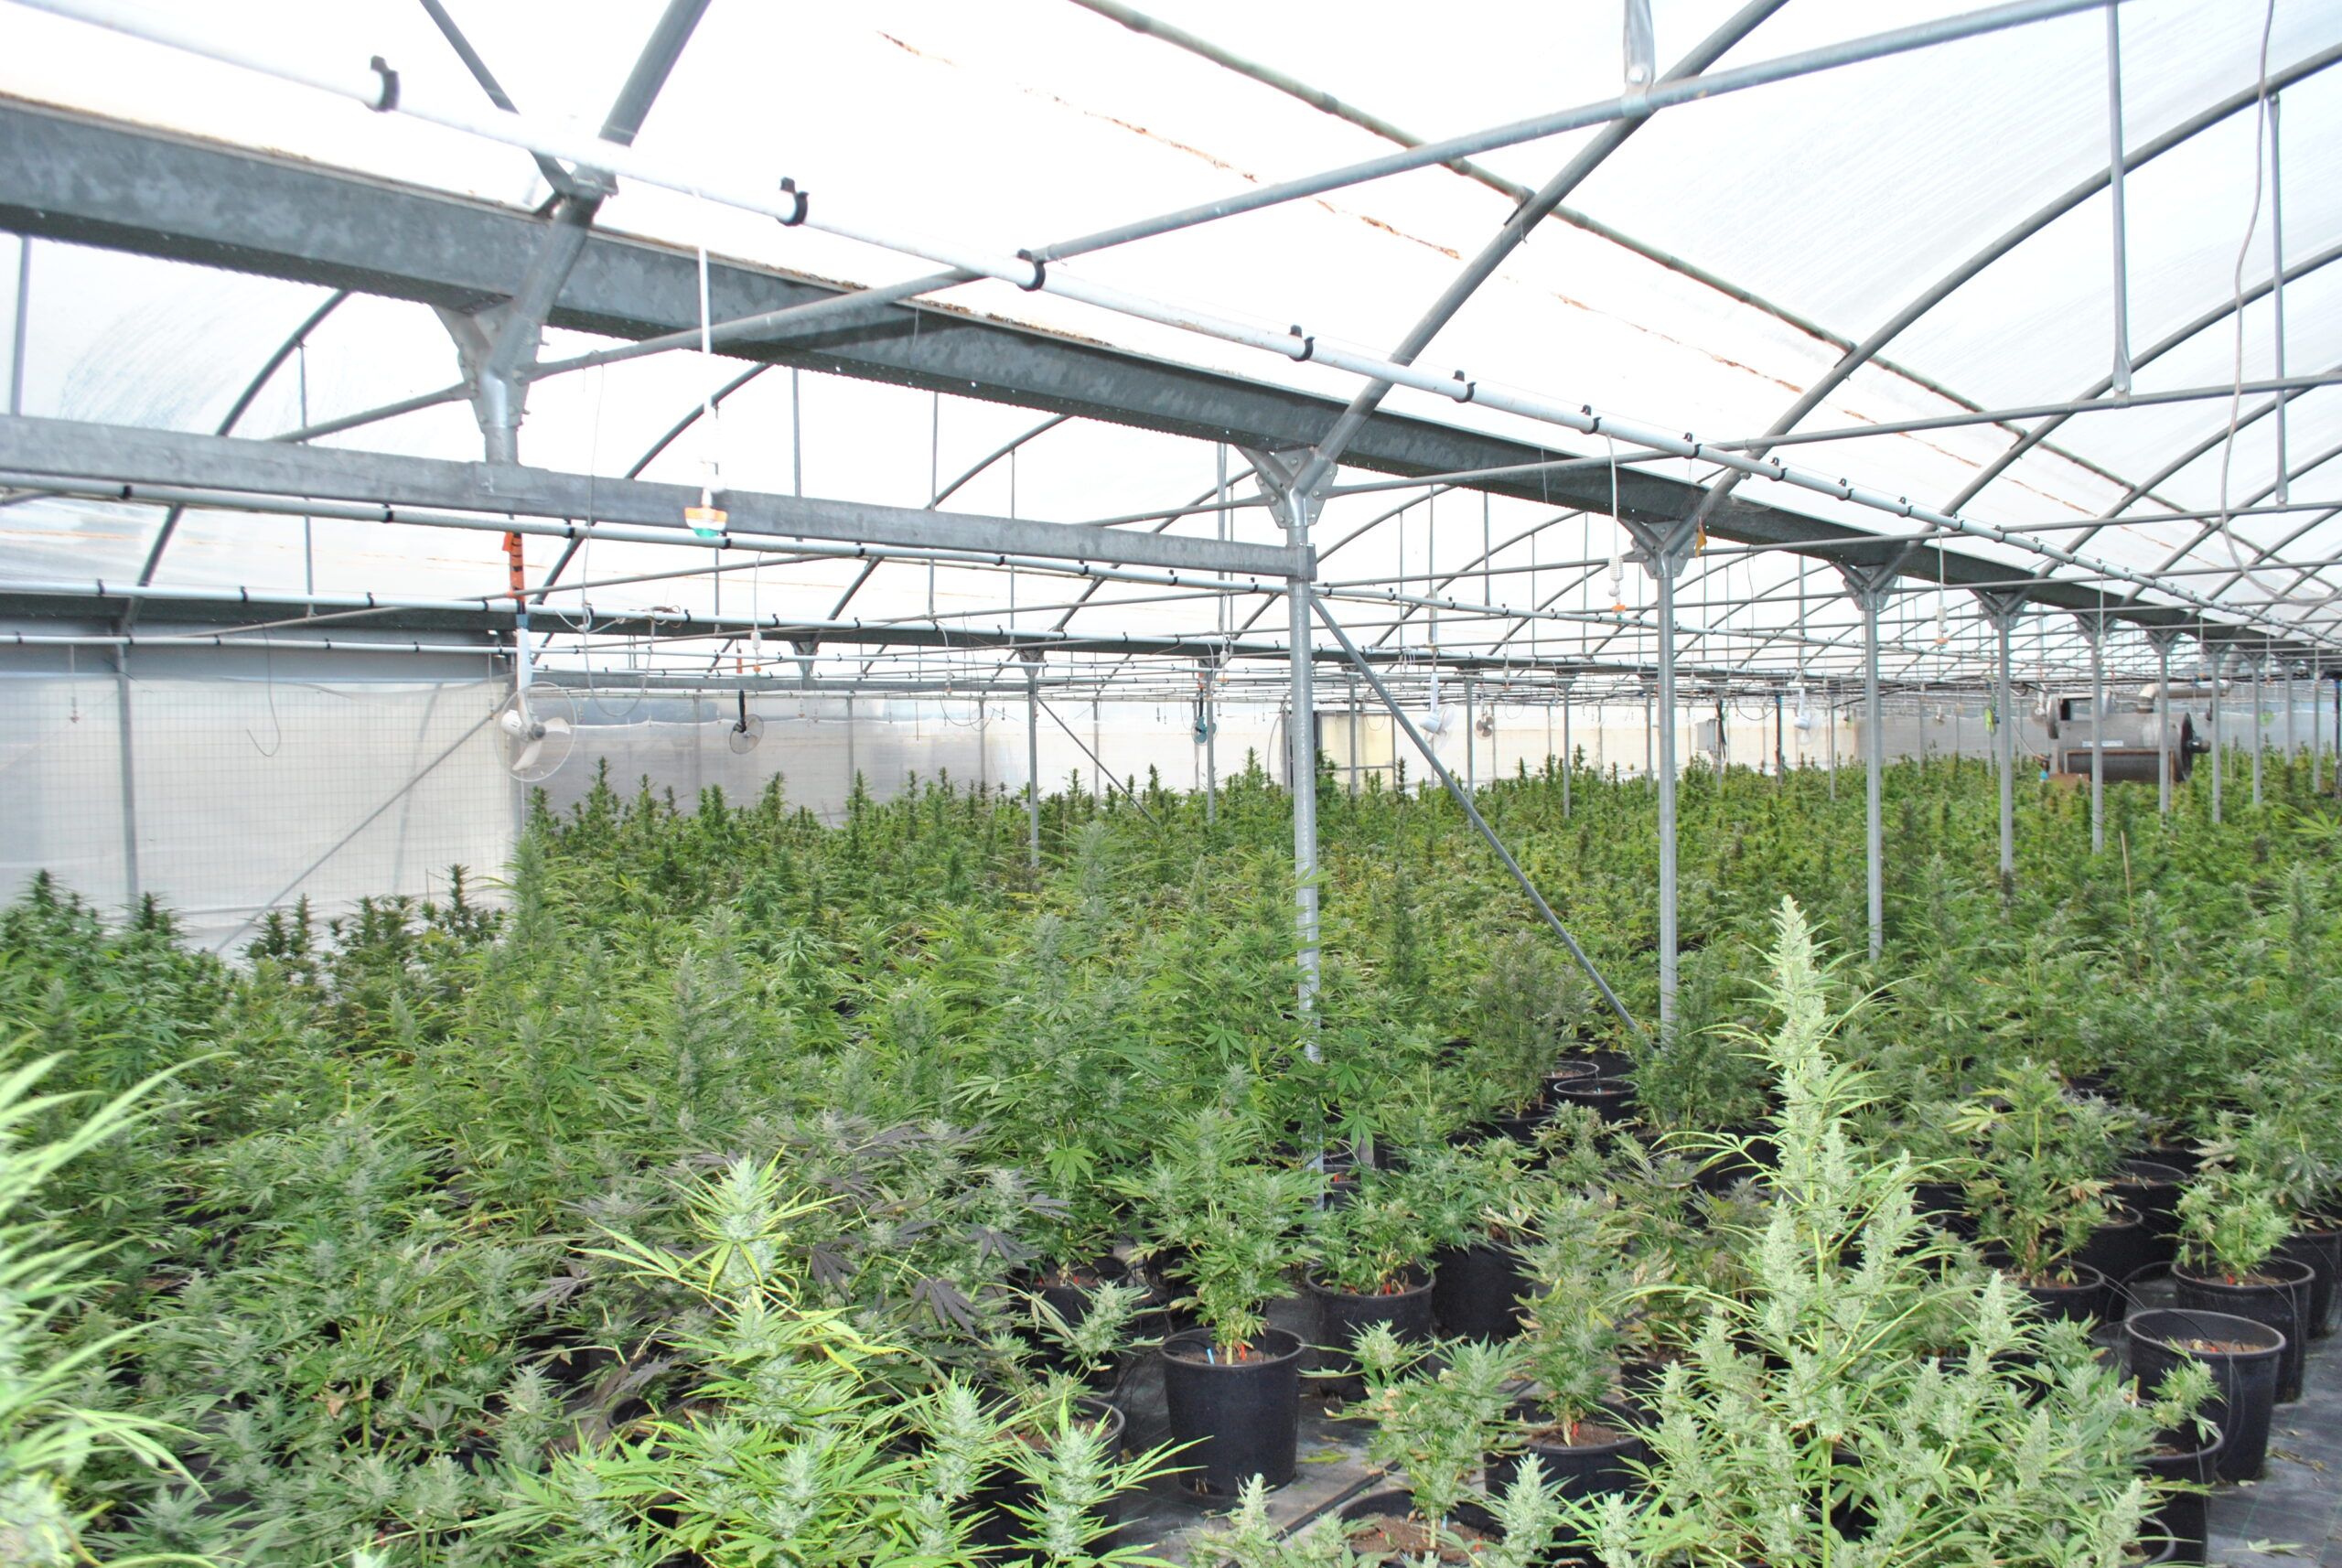 piantagione di marijuana a Terracina